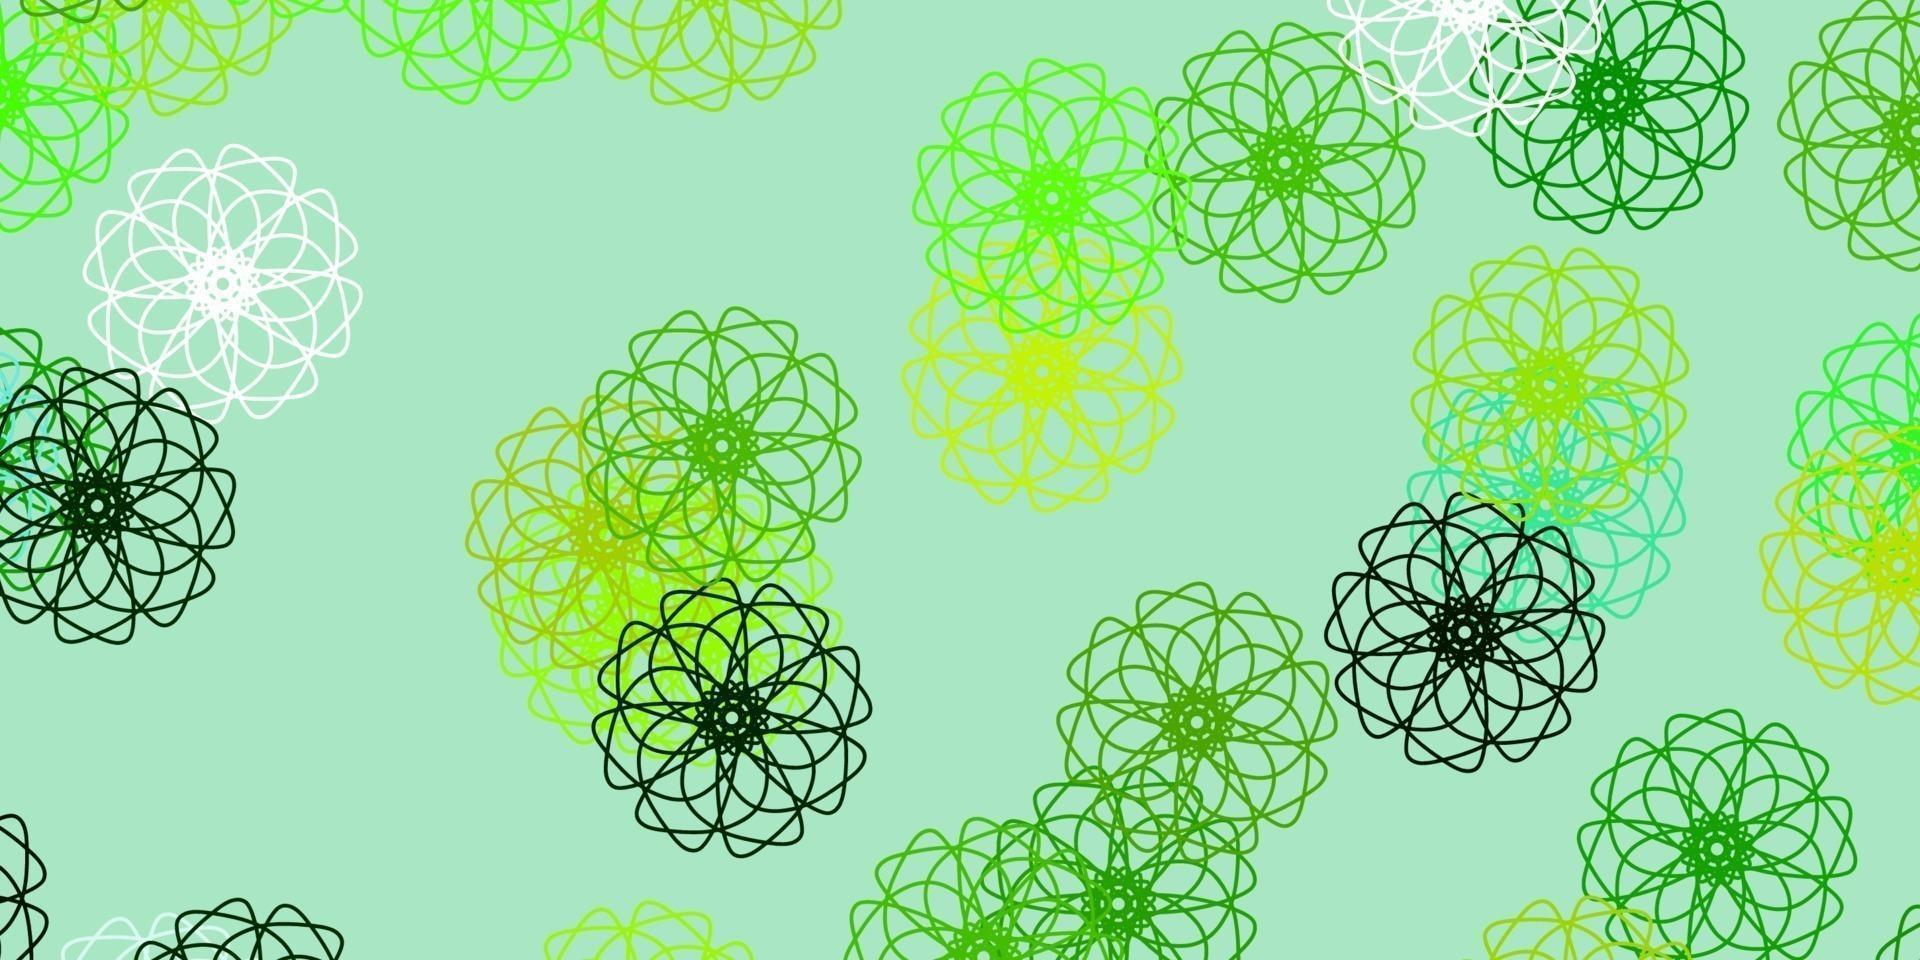 textura de doodle de vector verde claro, amarillo con flores.